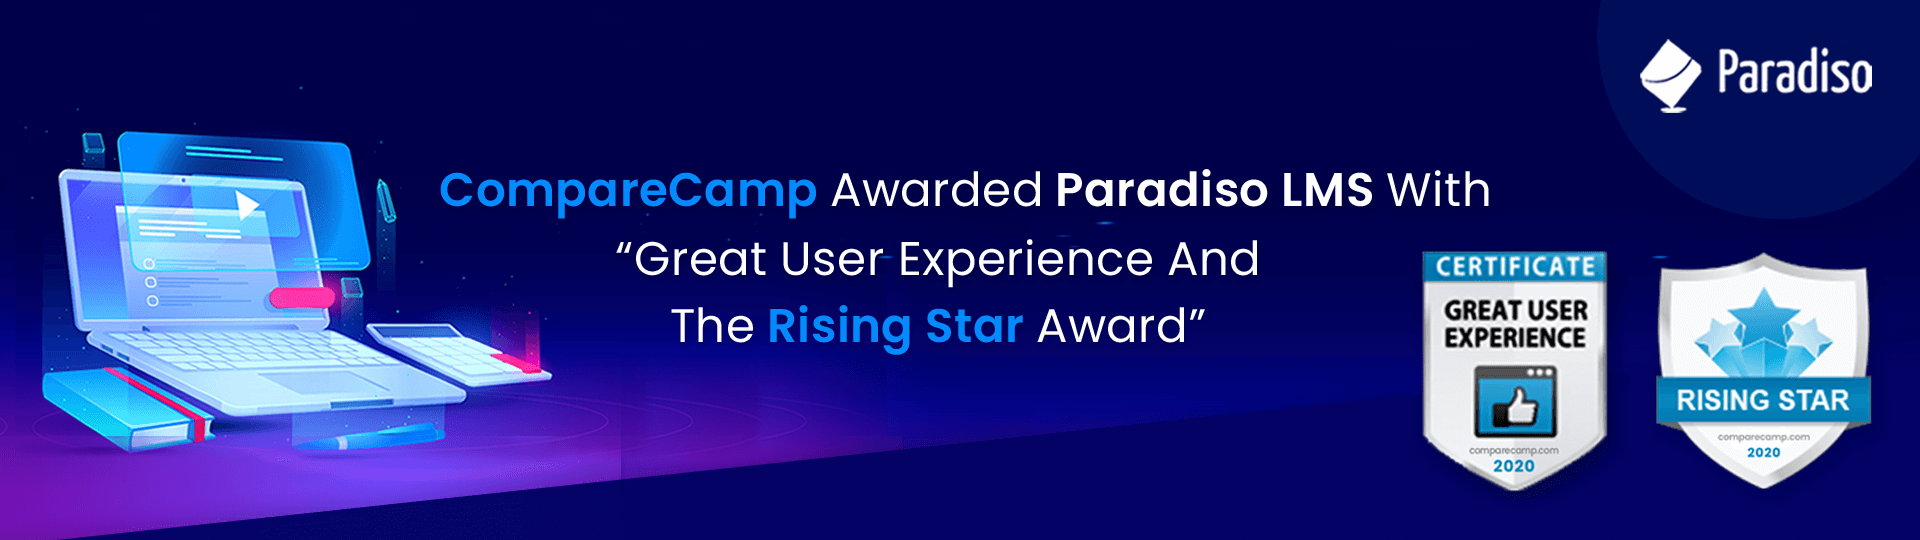 CompareCamp Award